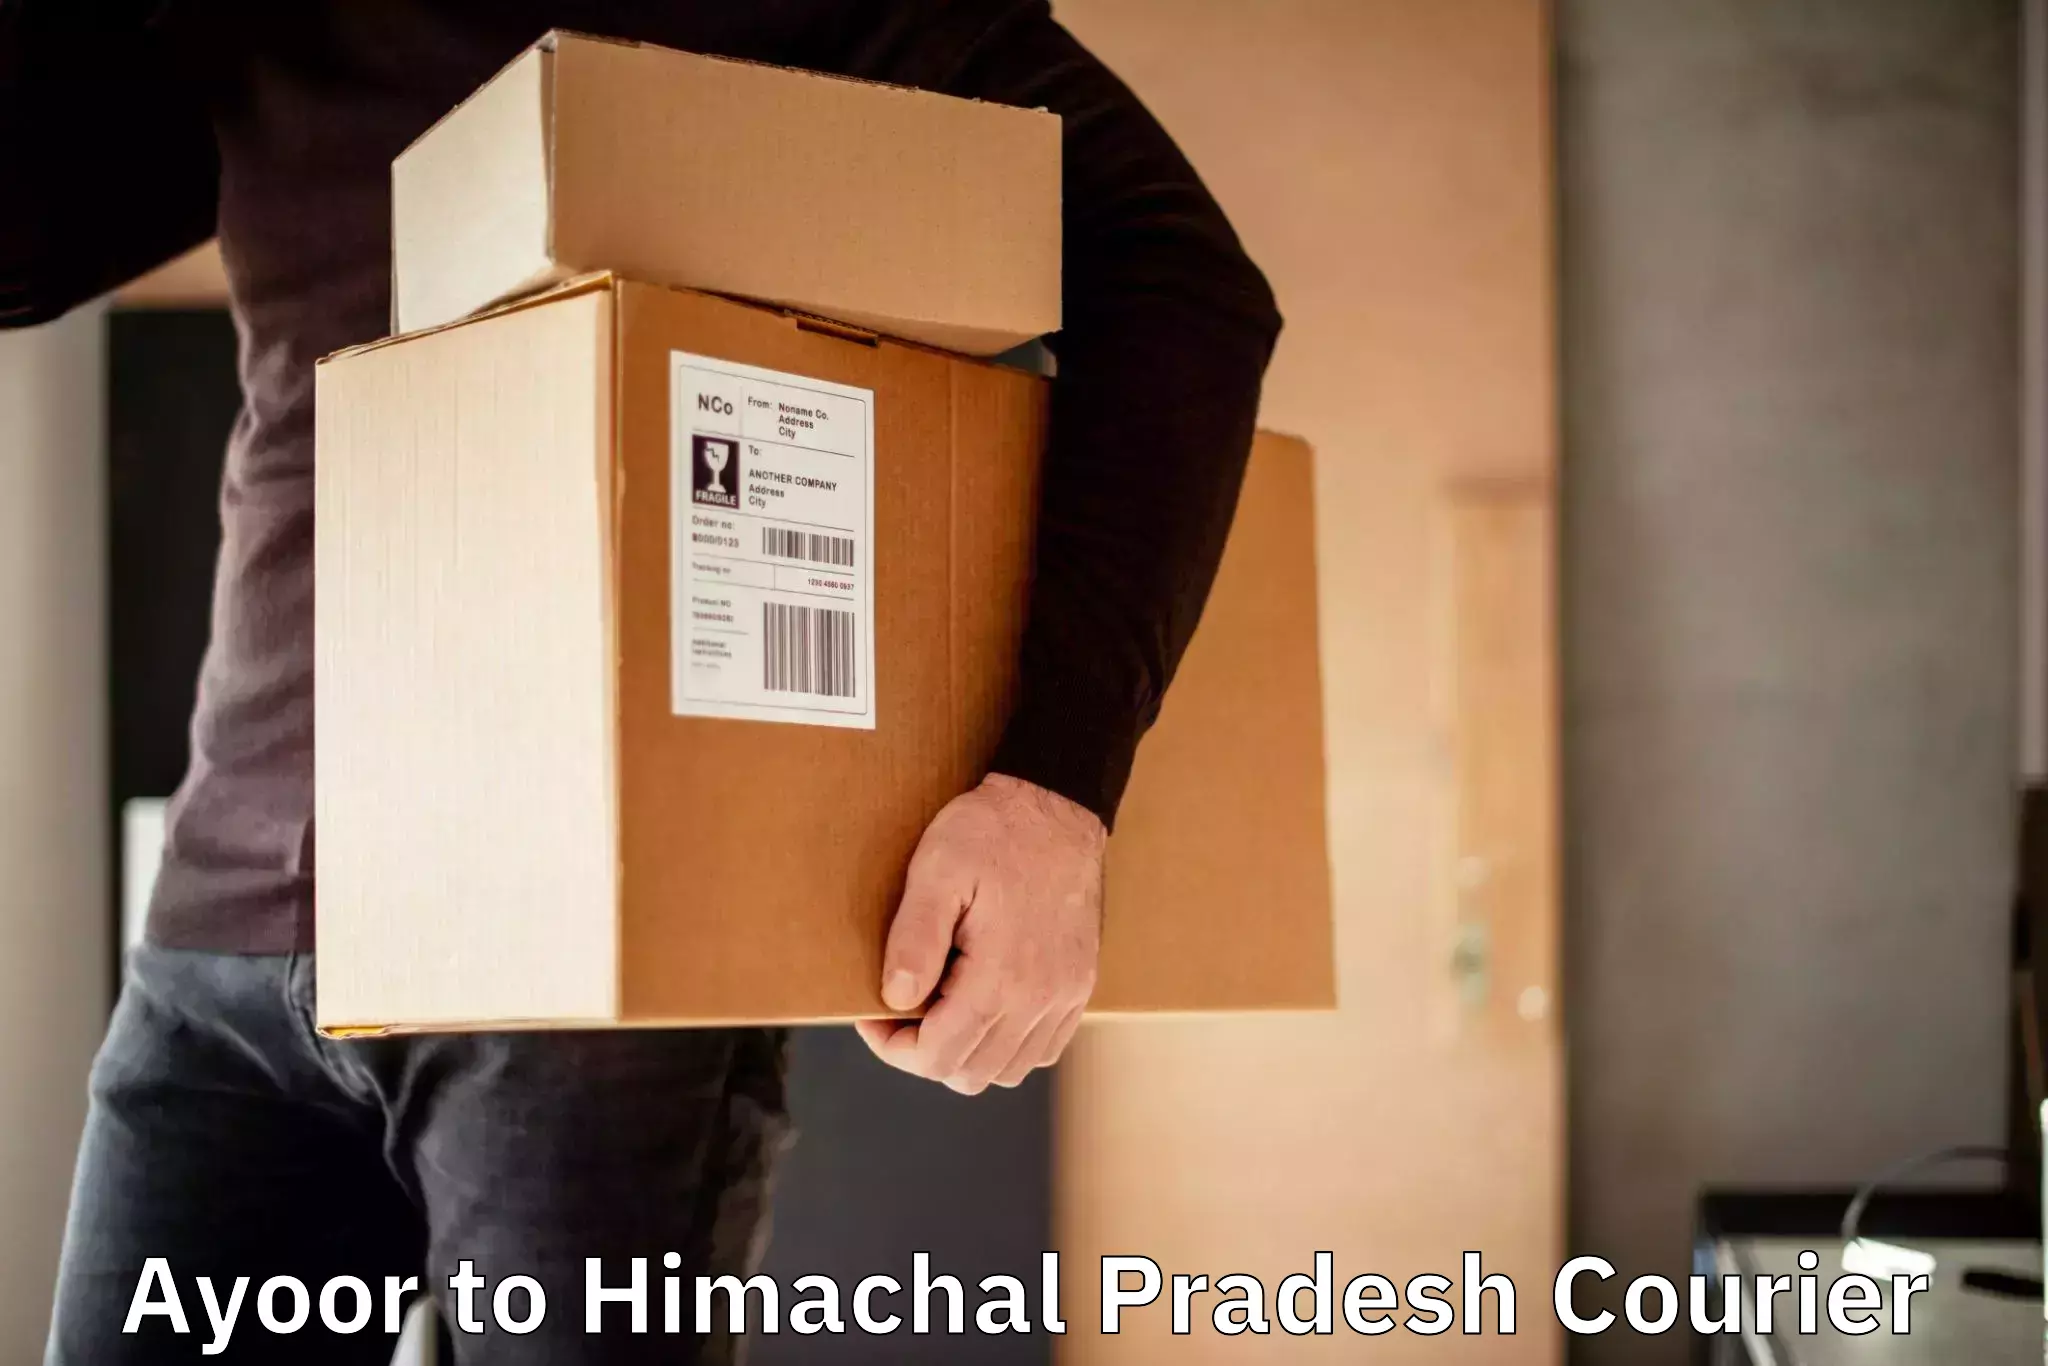 Business shipping needs Ayoor to Himachal Pradesh